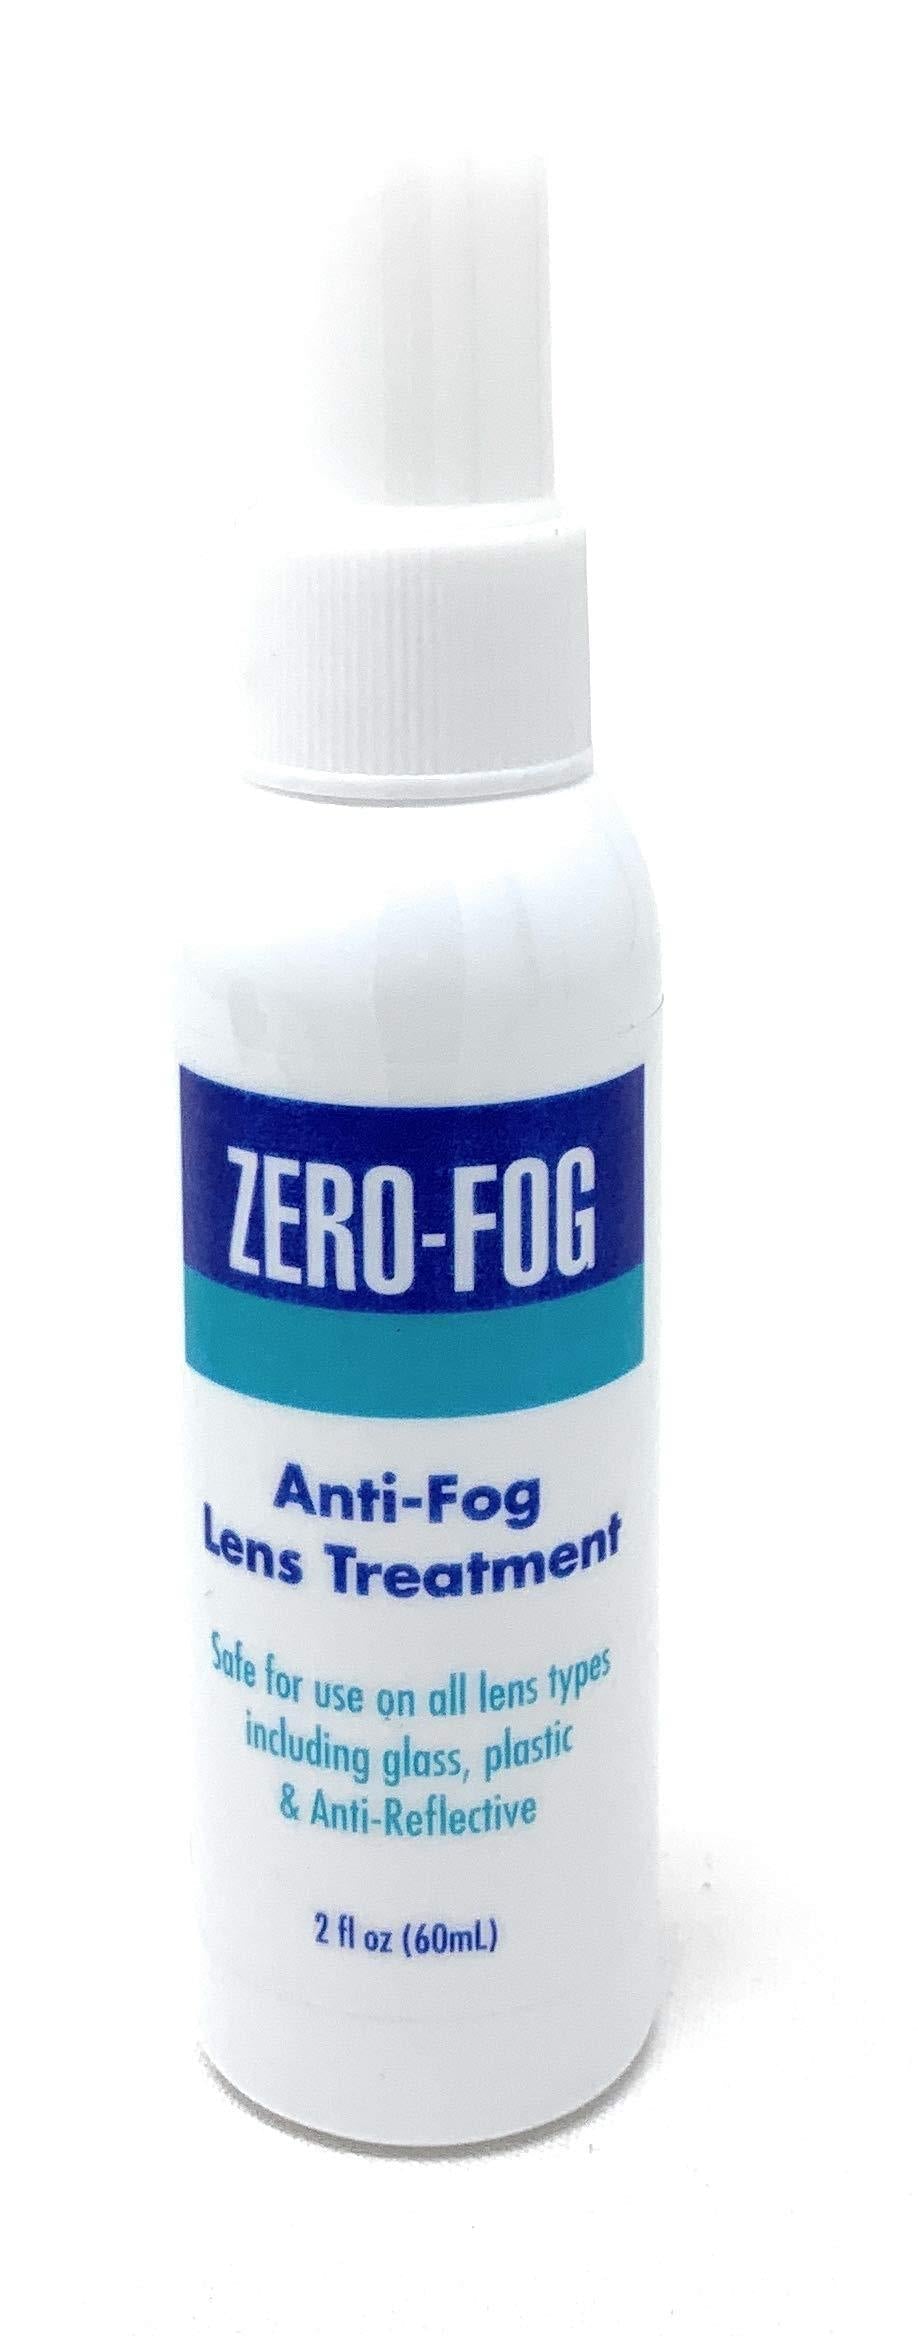 ZERO-FOG Anti-Fog Anti-Static Lens Goggle Glasses Treatment 60ml Spray Liquid